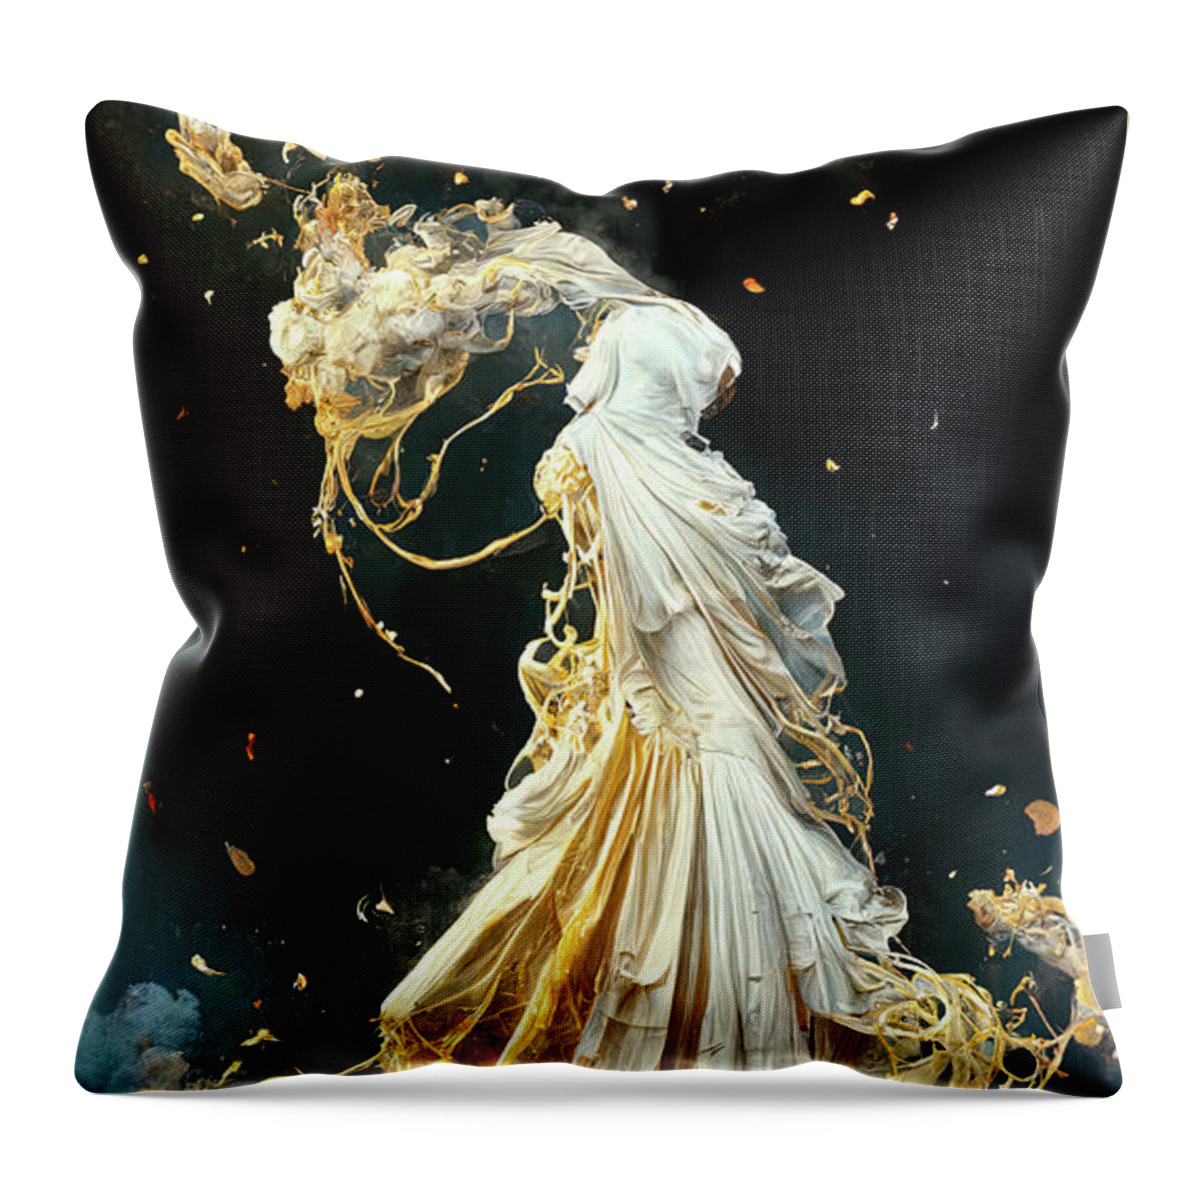 Housh Throw Pillow featuring the digital art Housh - The Goddess of Breath by Daniel Eskridge